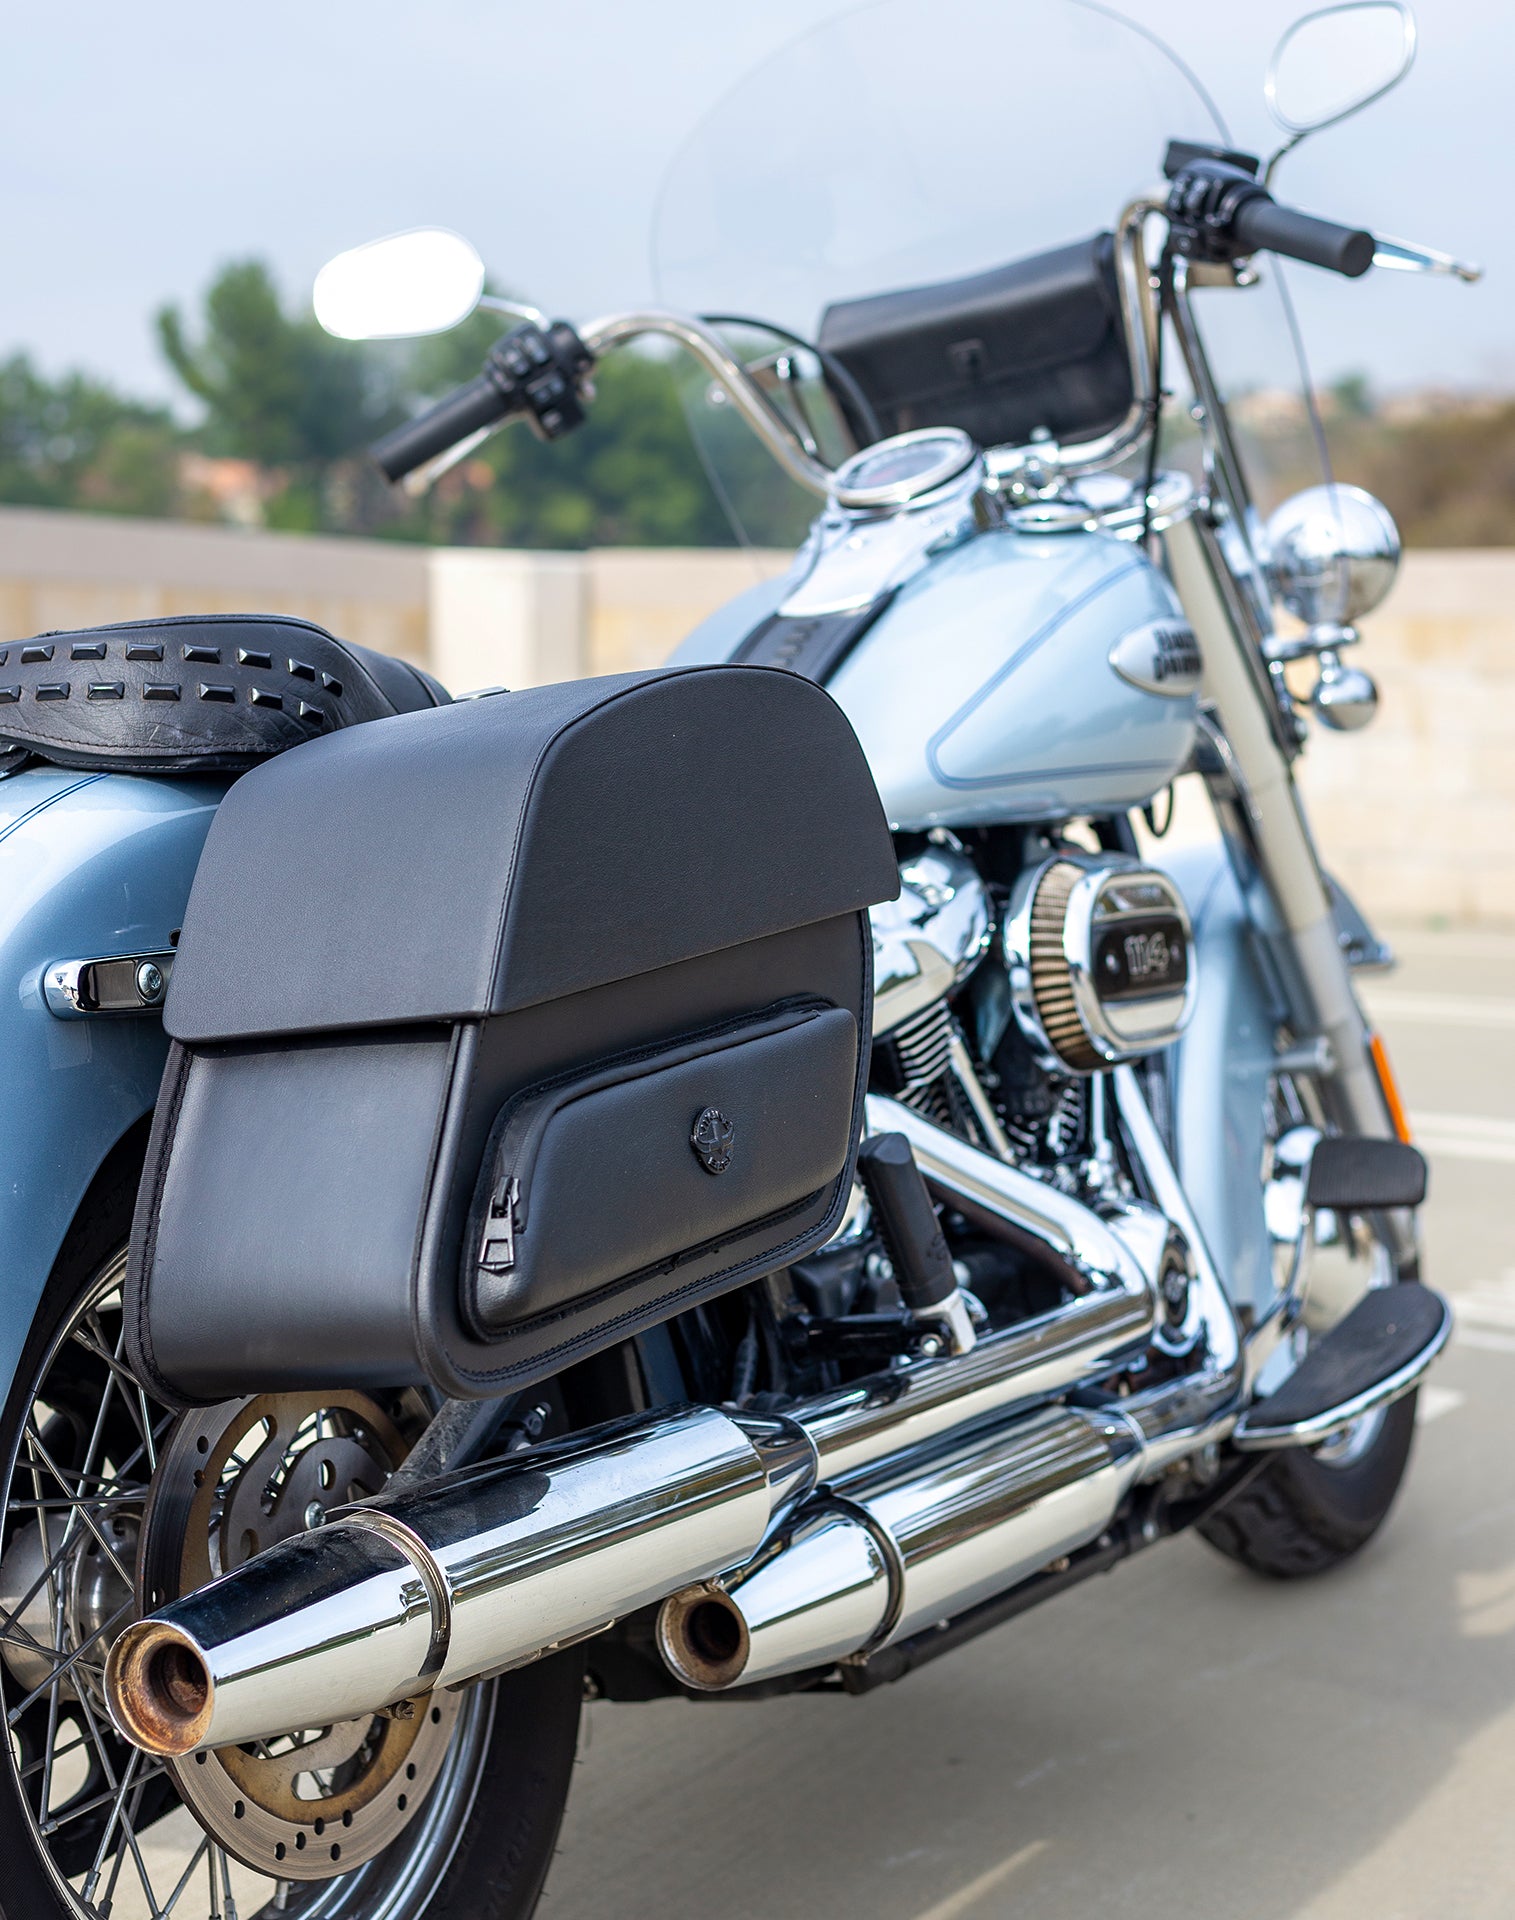 Viking Pantheon Large Motorcycle Leather Saddlebags For Harley Davidson Softail Heritage Flst I C Ci are Durable